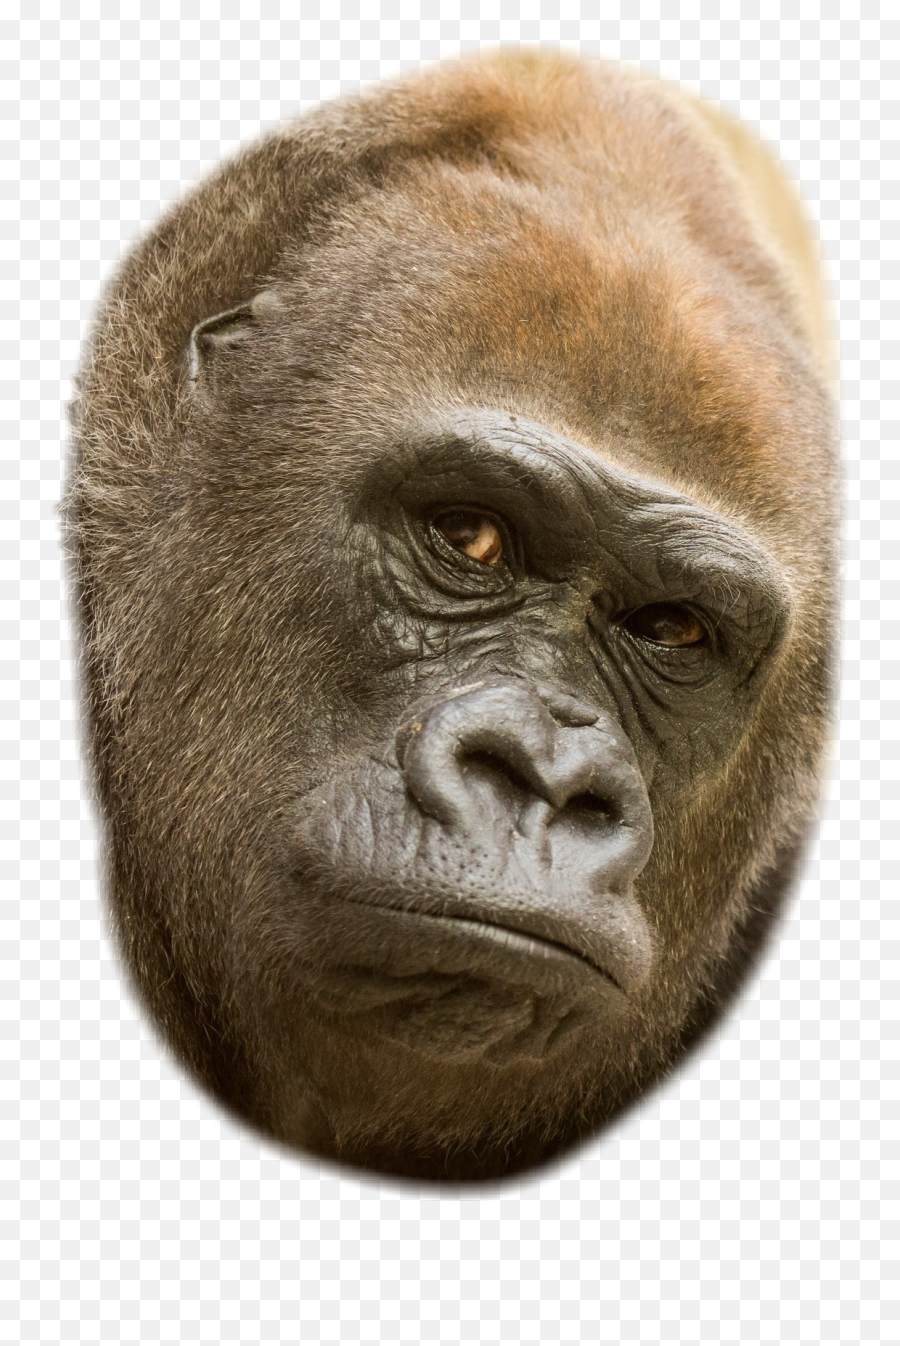 The Most Edited Emoji,Gorilla Emoji